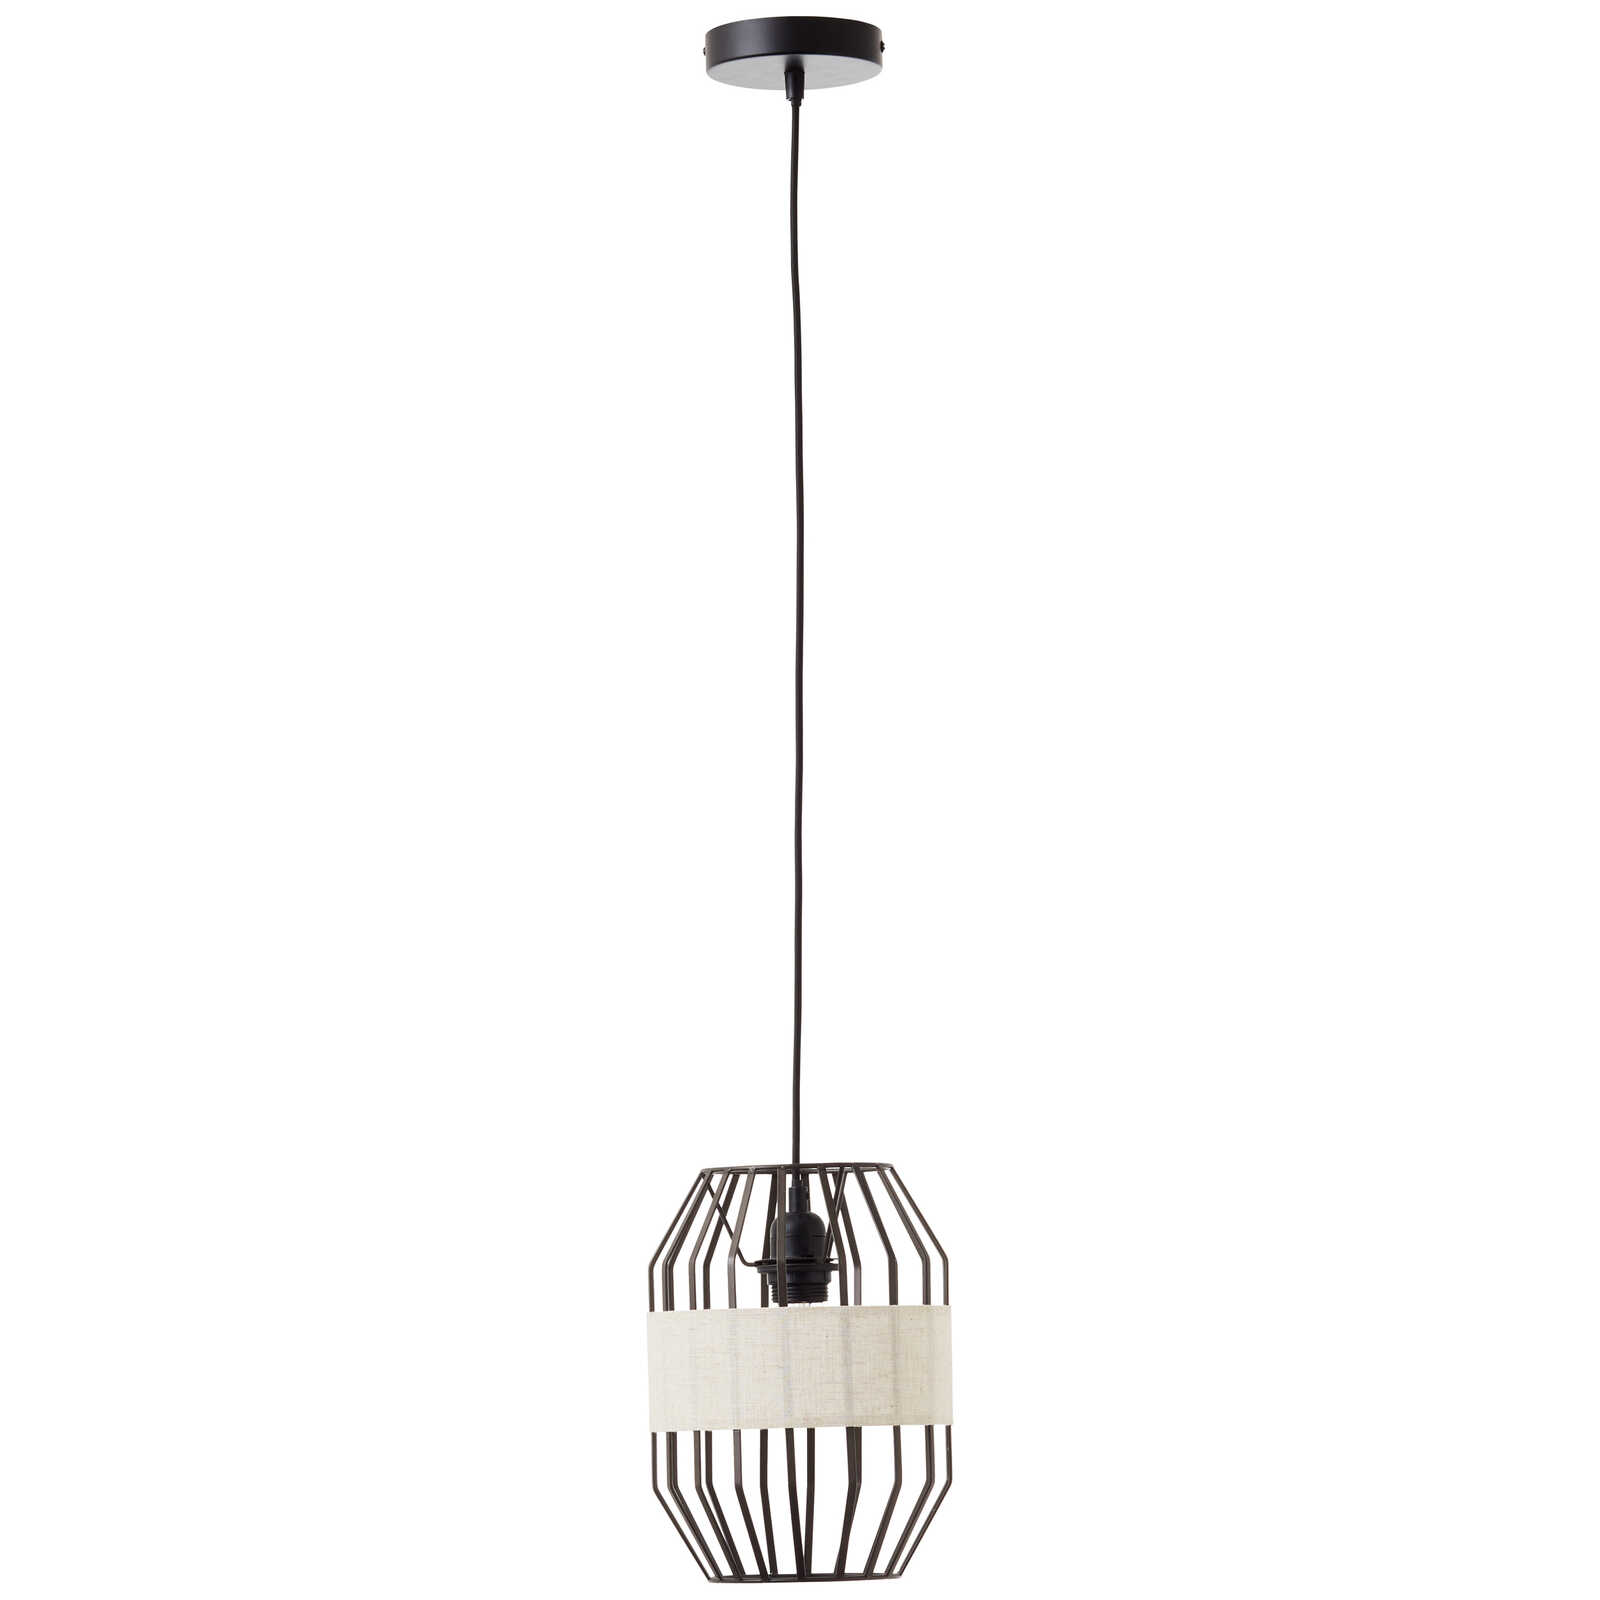             Textiel hanglamp - Nino 1 - Bruin
        